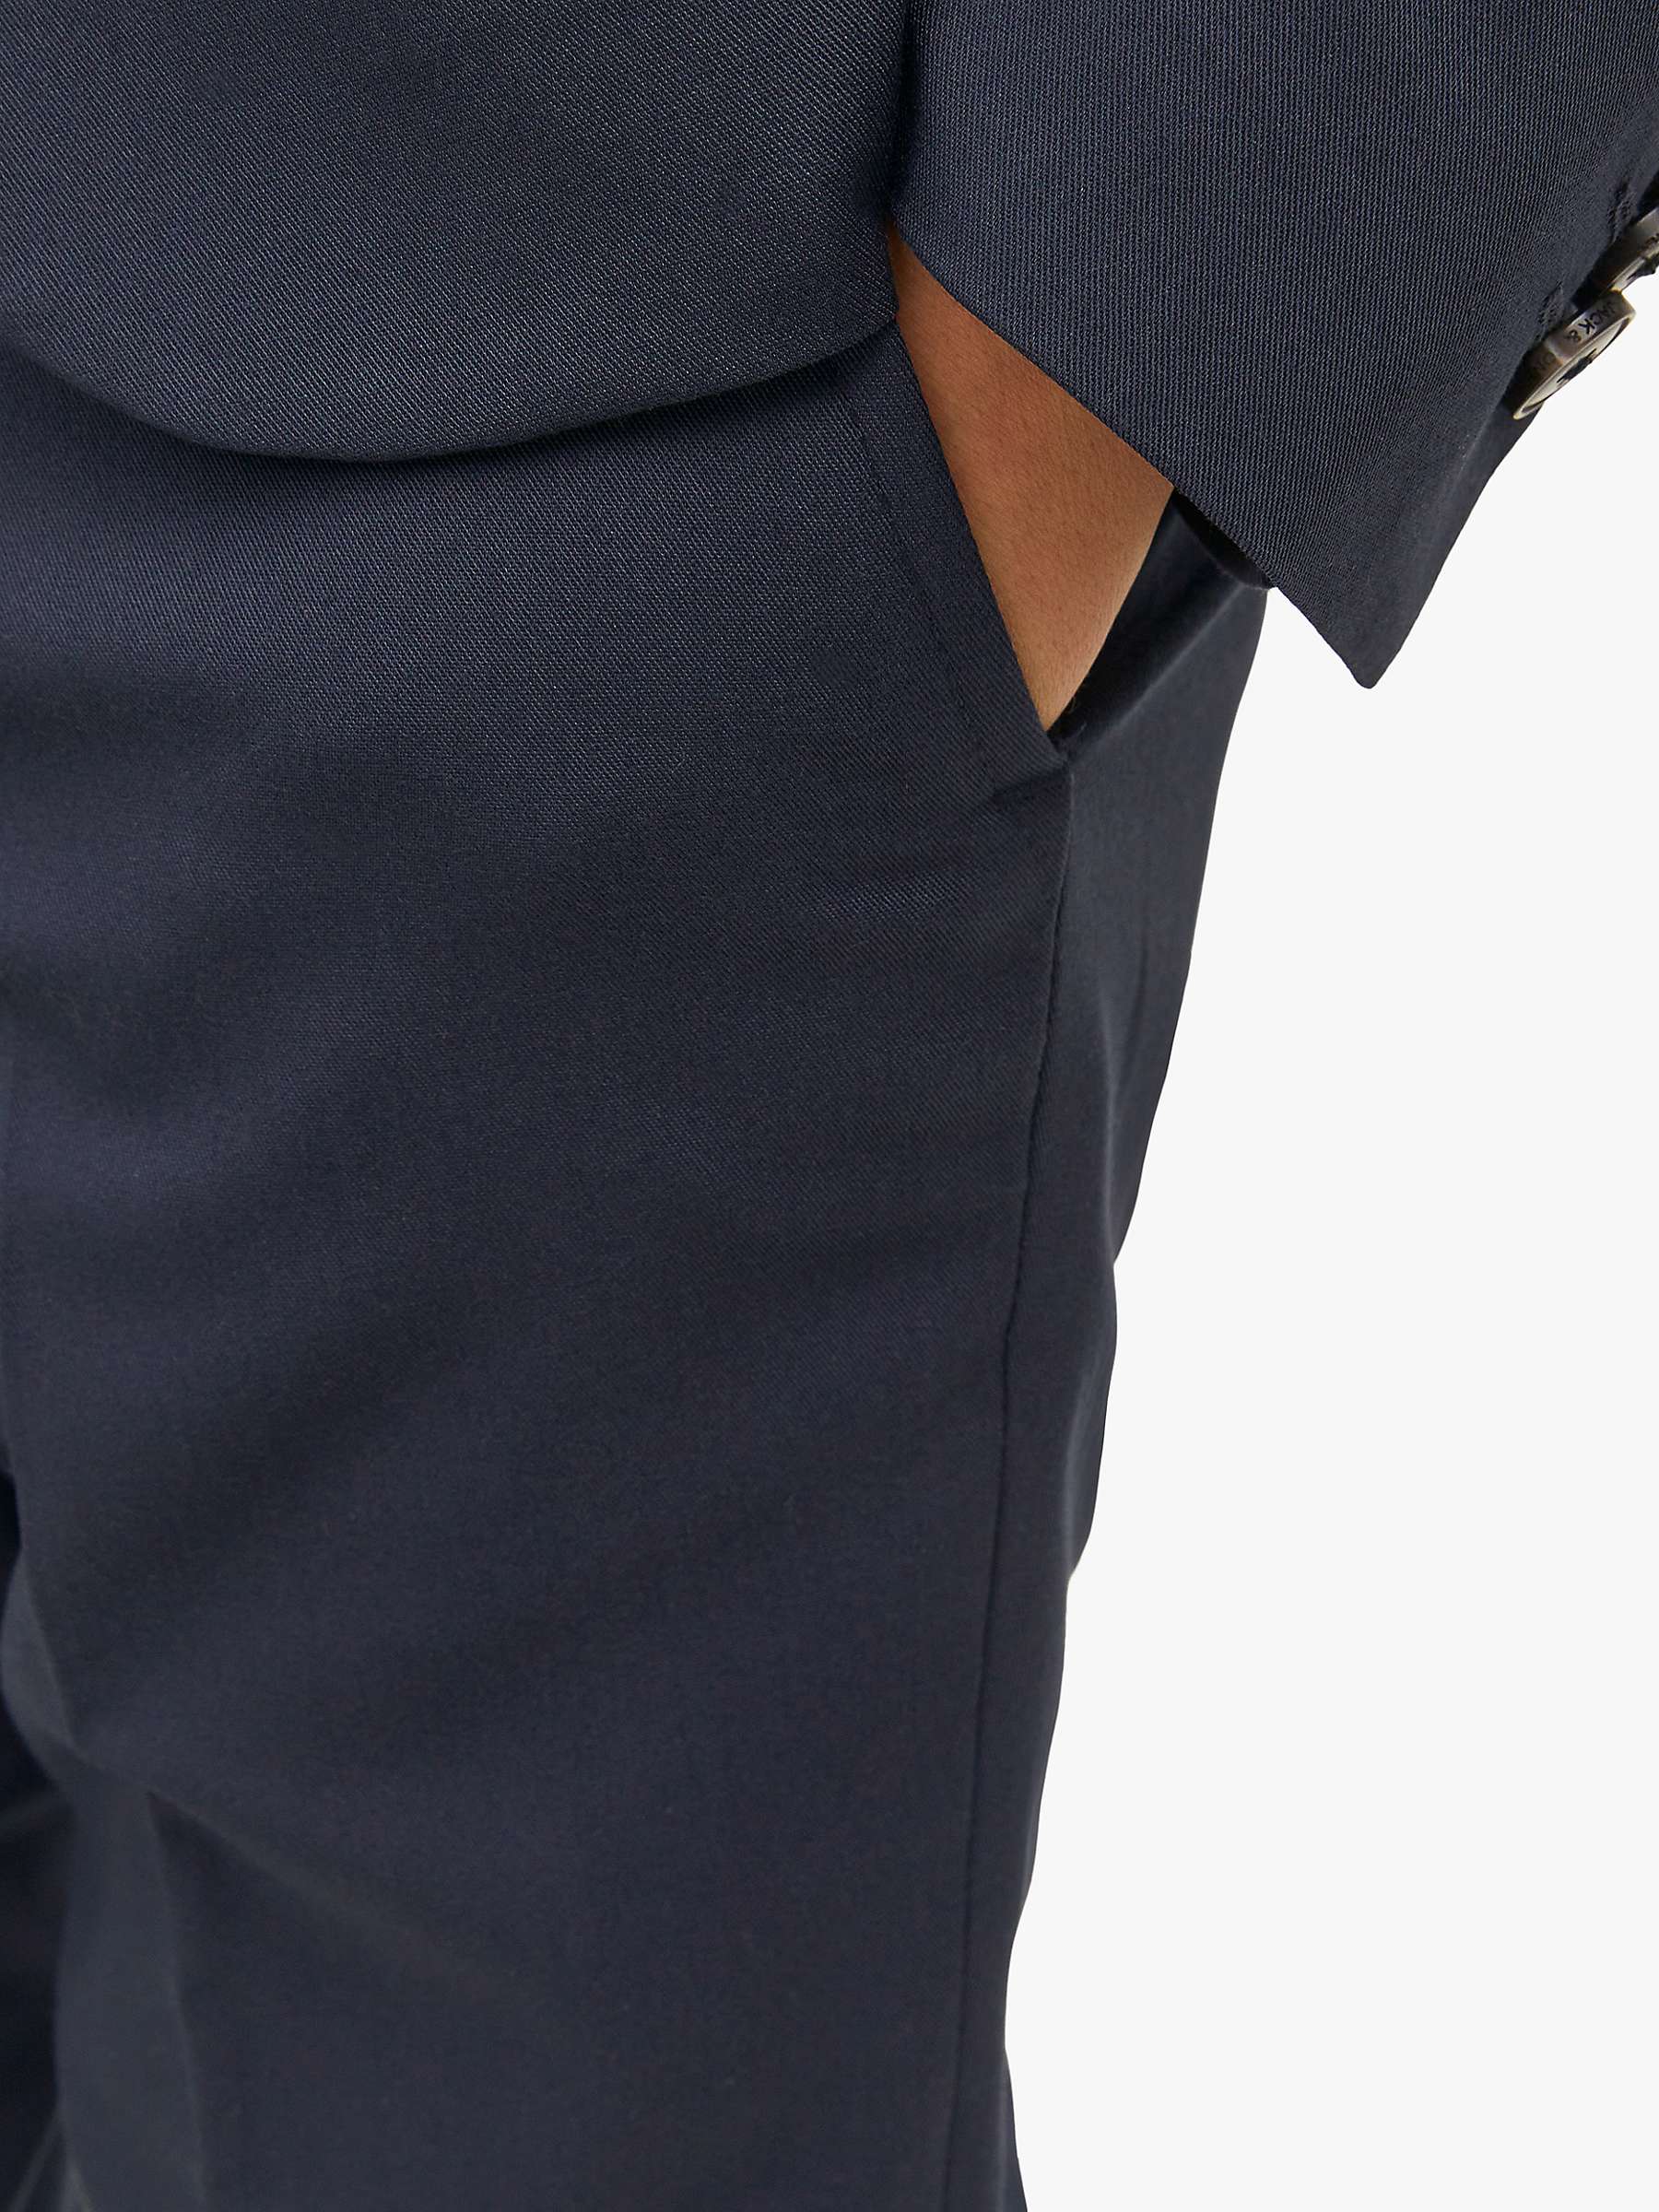 Buy Jack & Jones Kids' Suit Trousers, Navy Online at johnlewis.com